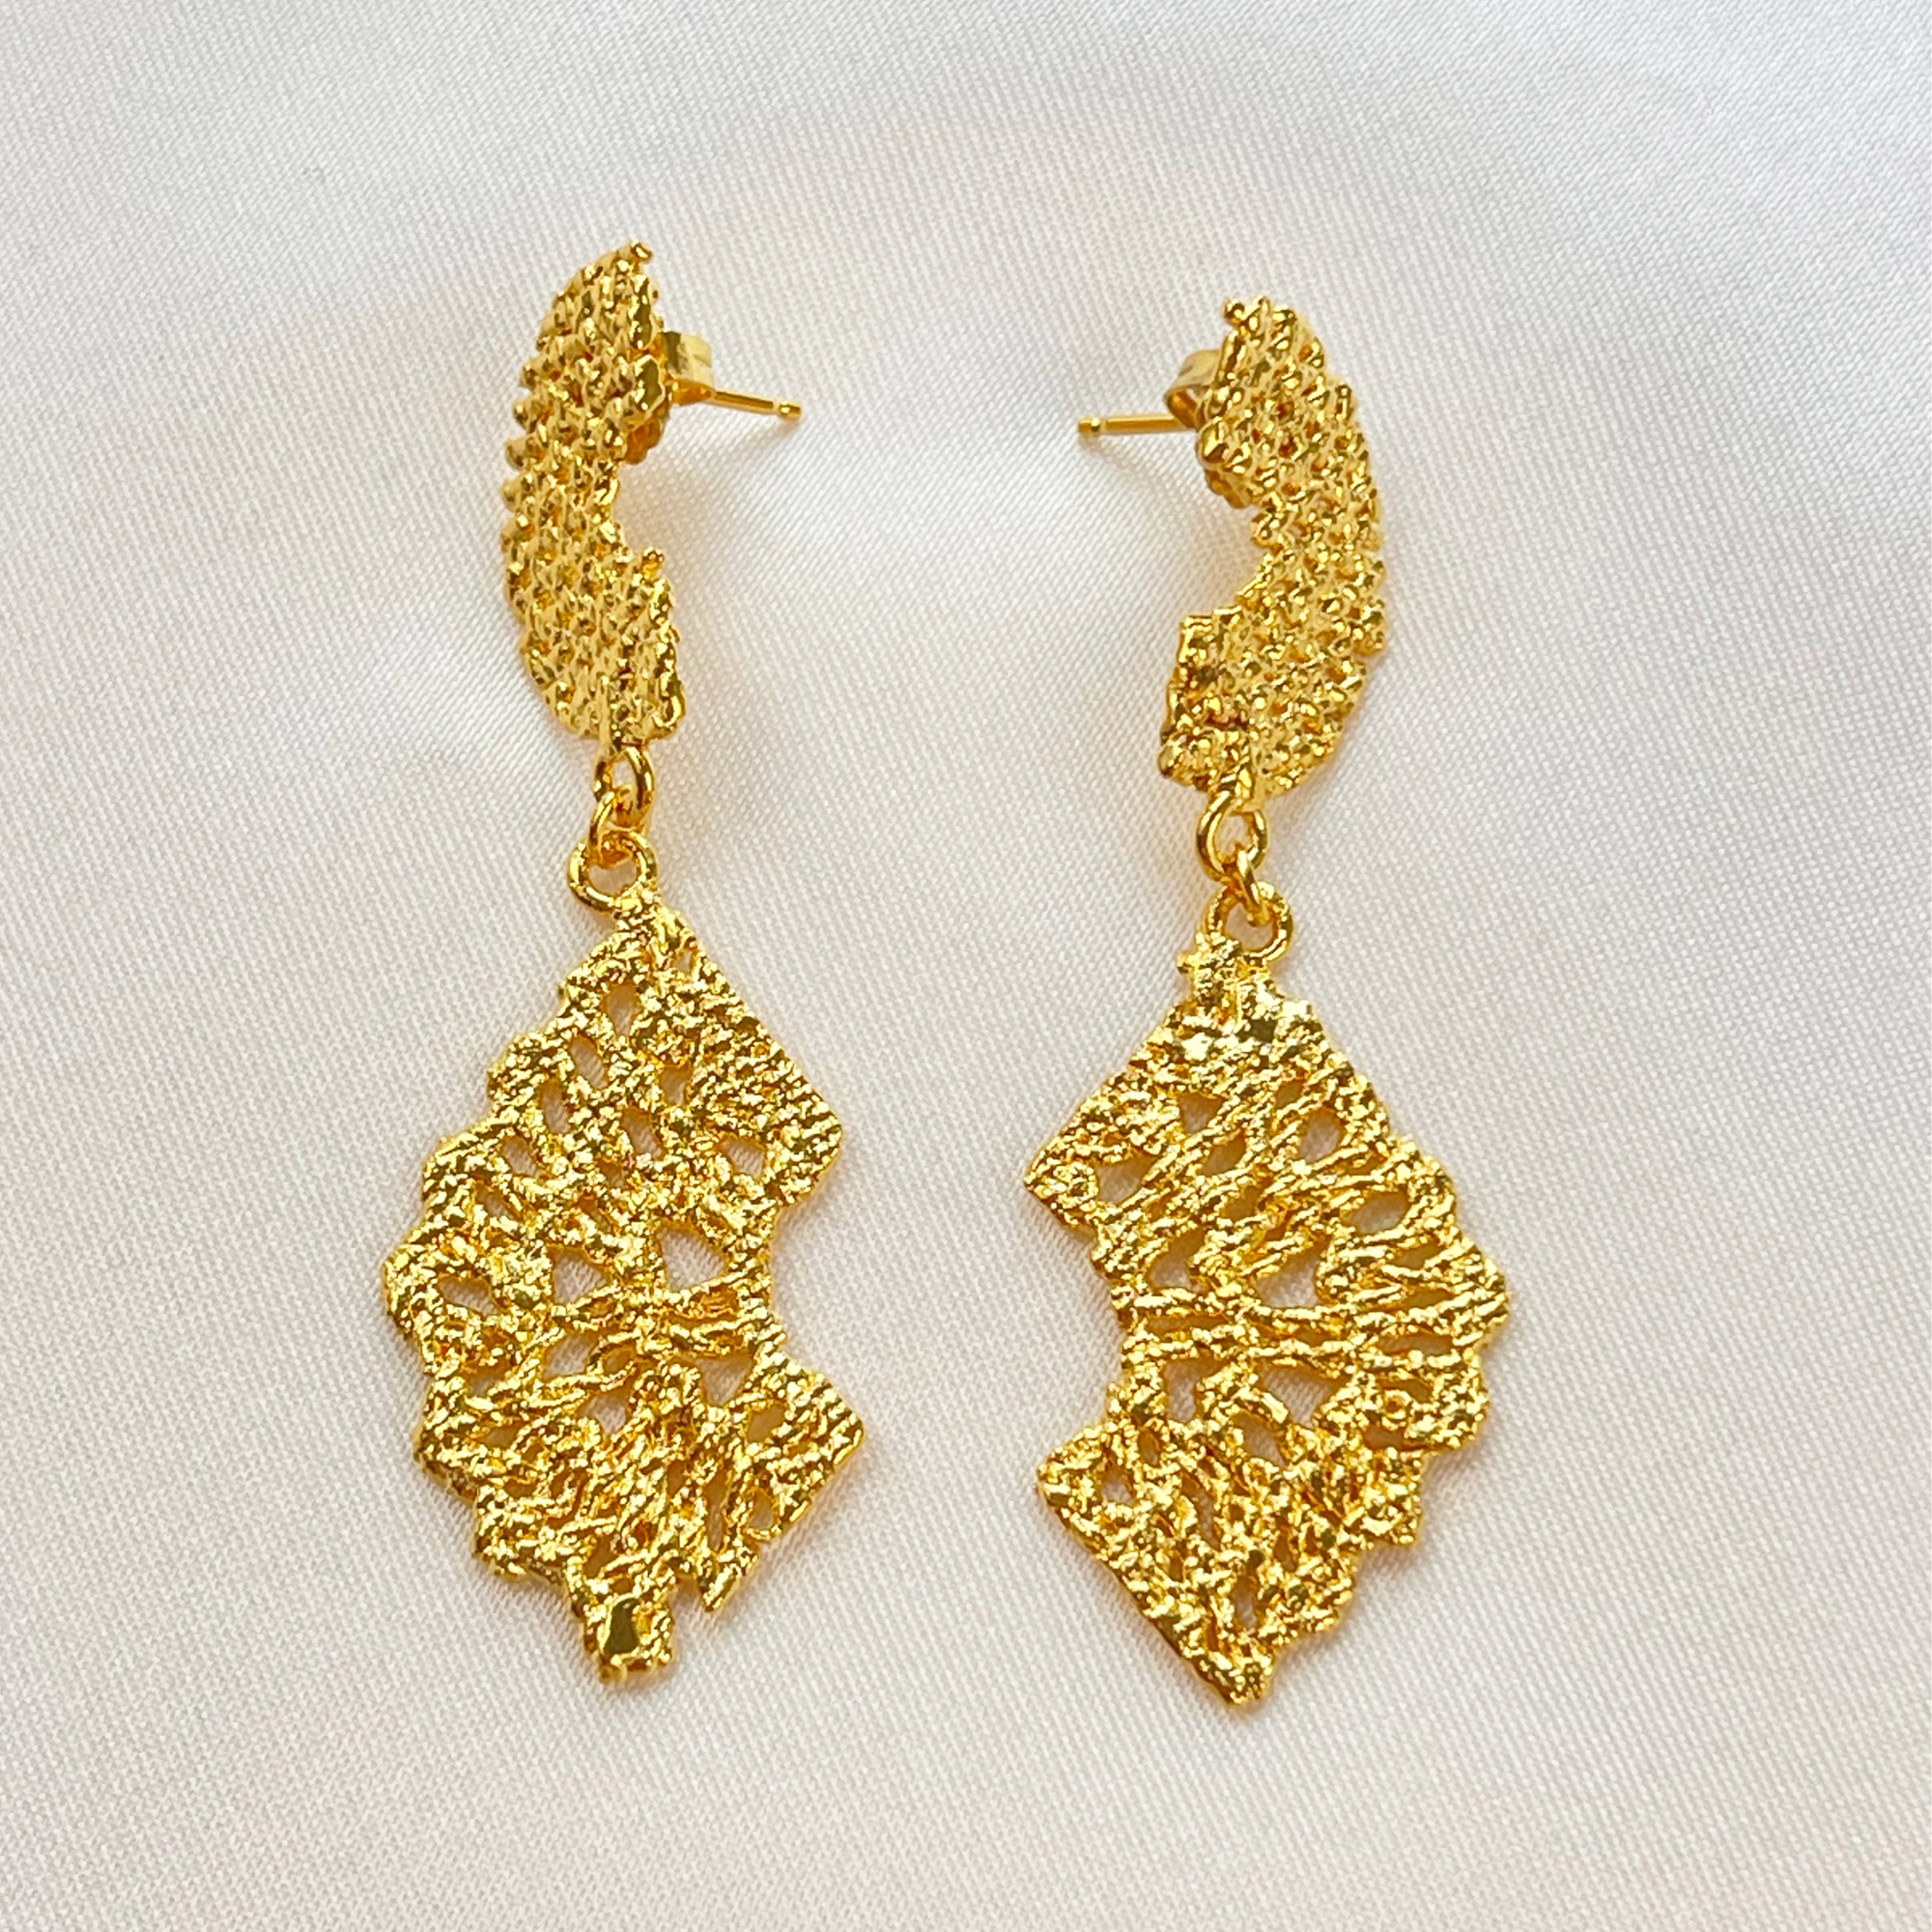 Kerstin lace earrings from Swedish lace in 24k gold.